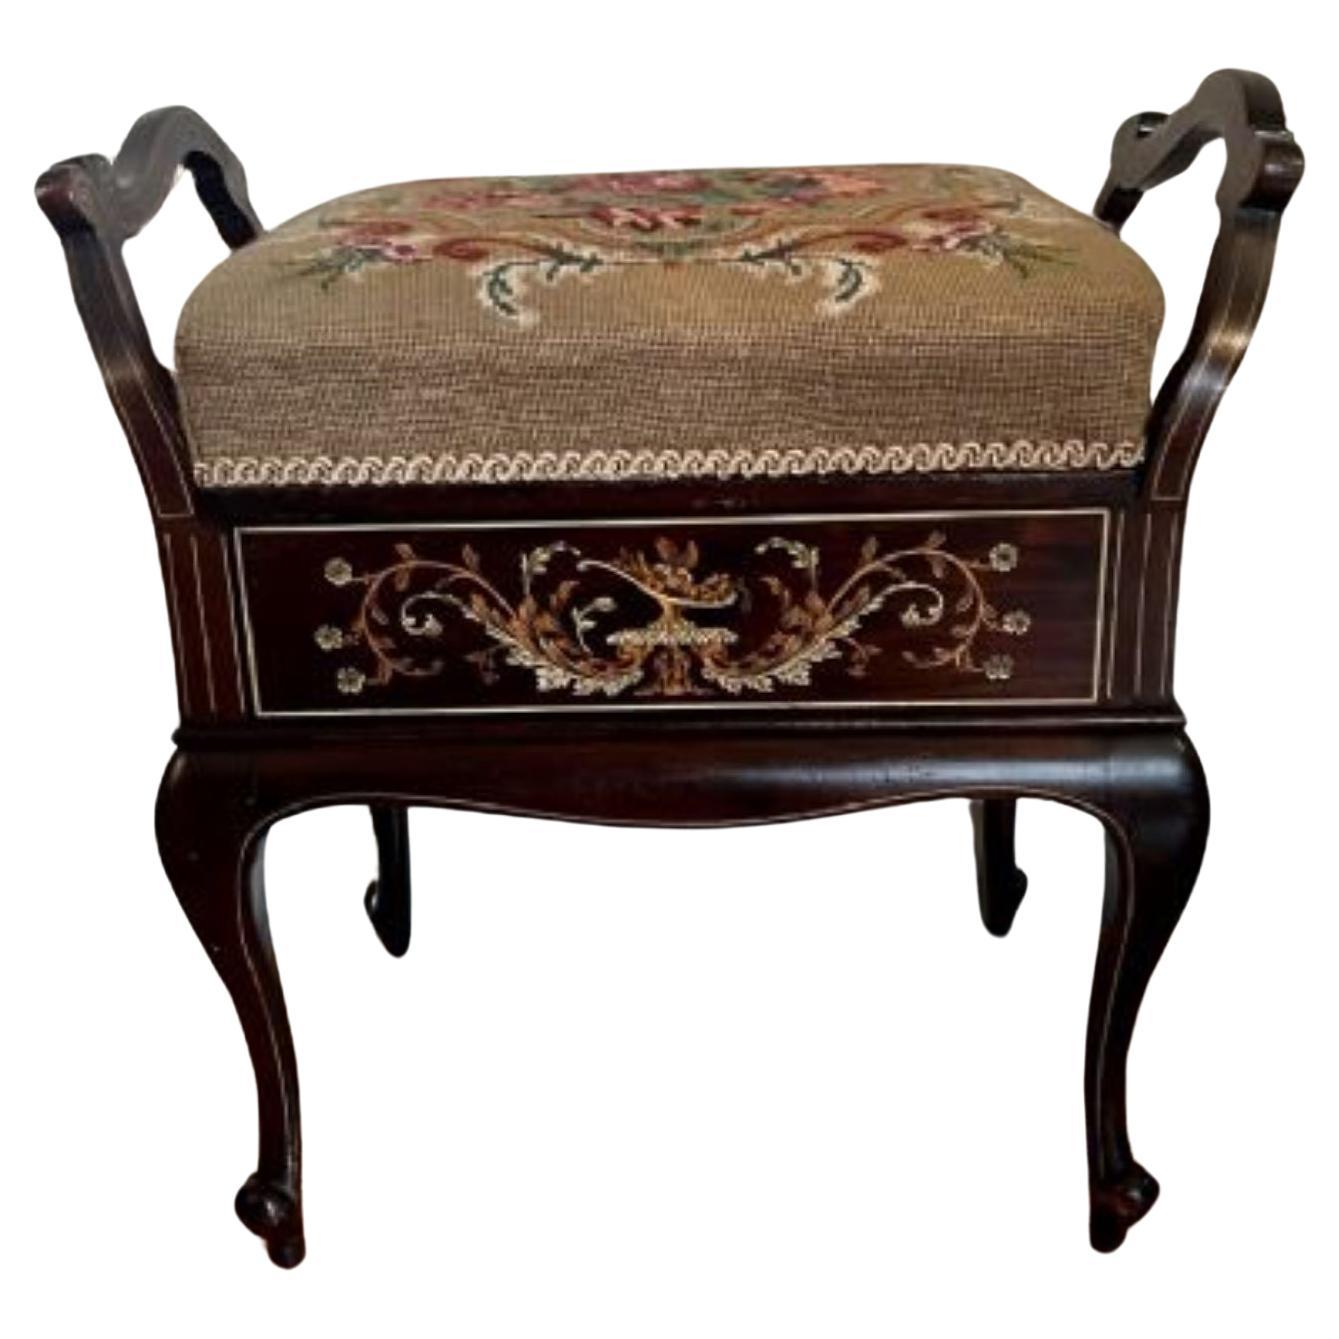 Fine quality antique Victorian mahogany inlaid freestanding piano stool